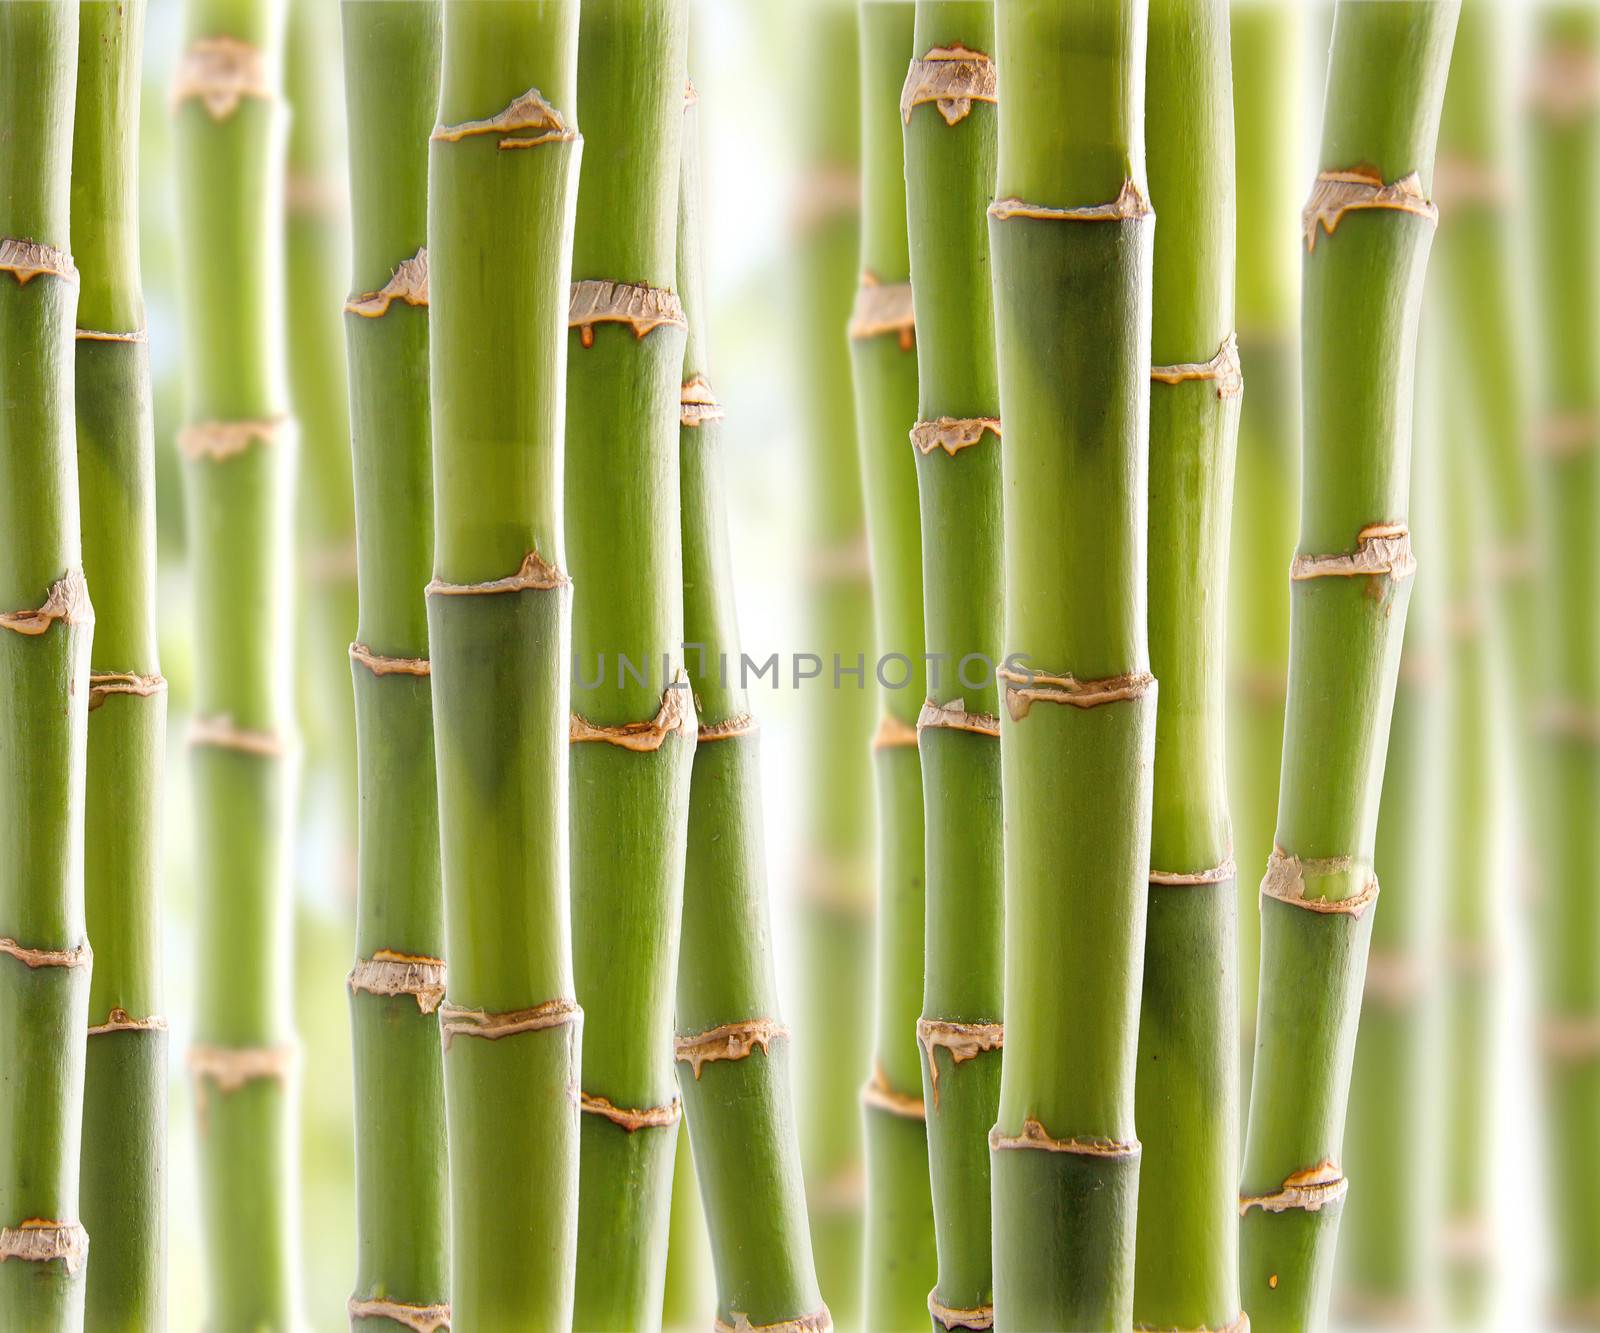 Bamboo Jungle by dynamicfoto